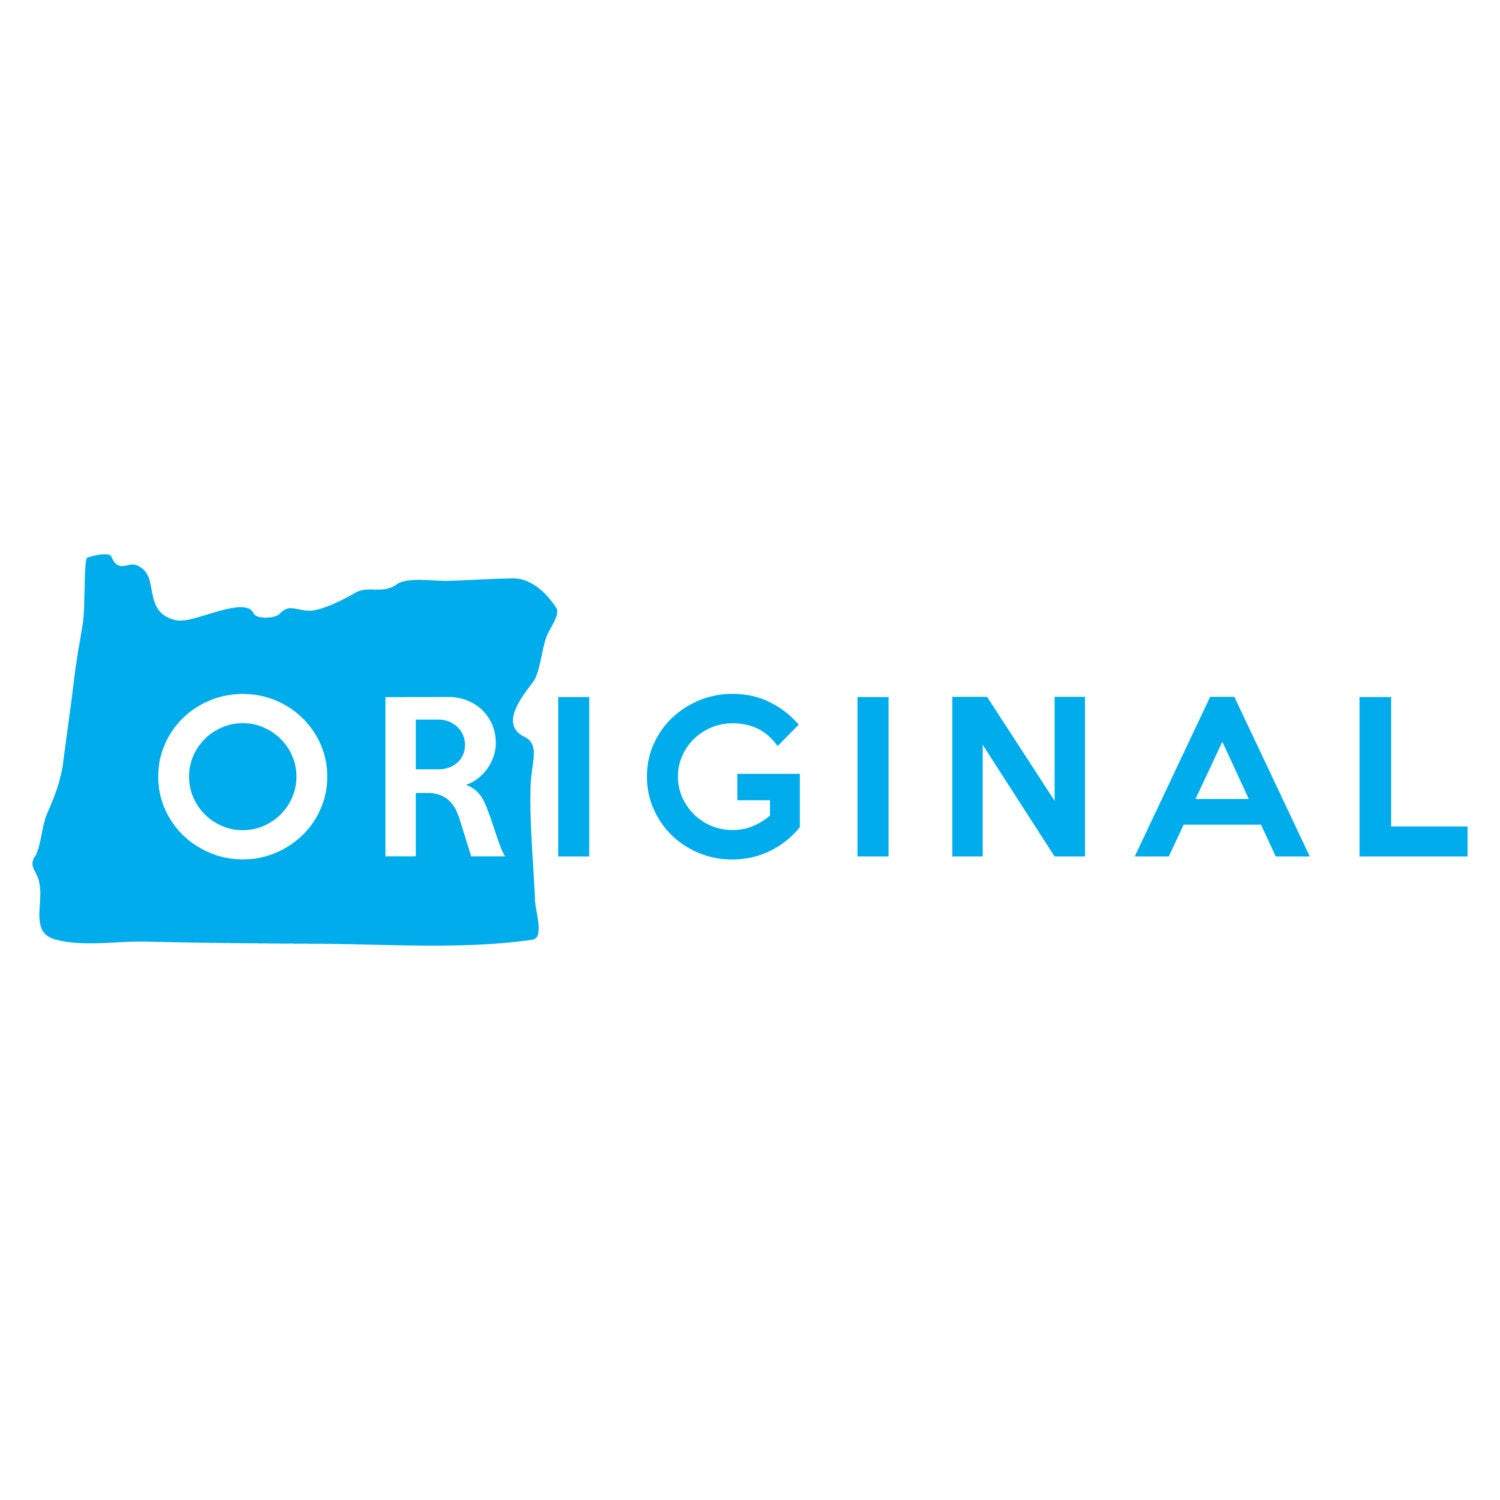 Oregon *OR*iginal | Die-Cut Vinyl Decal | Laptop Decal | Car Window Decal | Water Bottle Sticker | PNW Decal | Phone Decal | Bumper Sticker - Dukes Decals